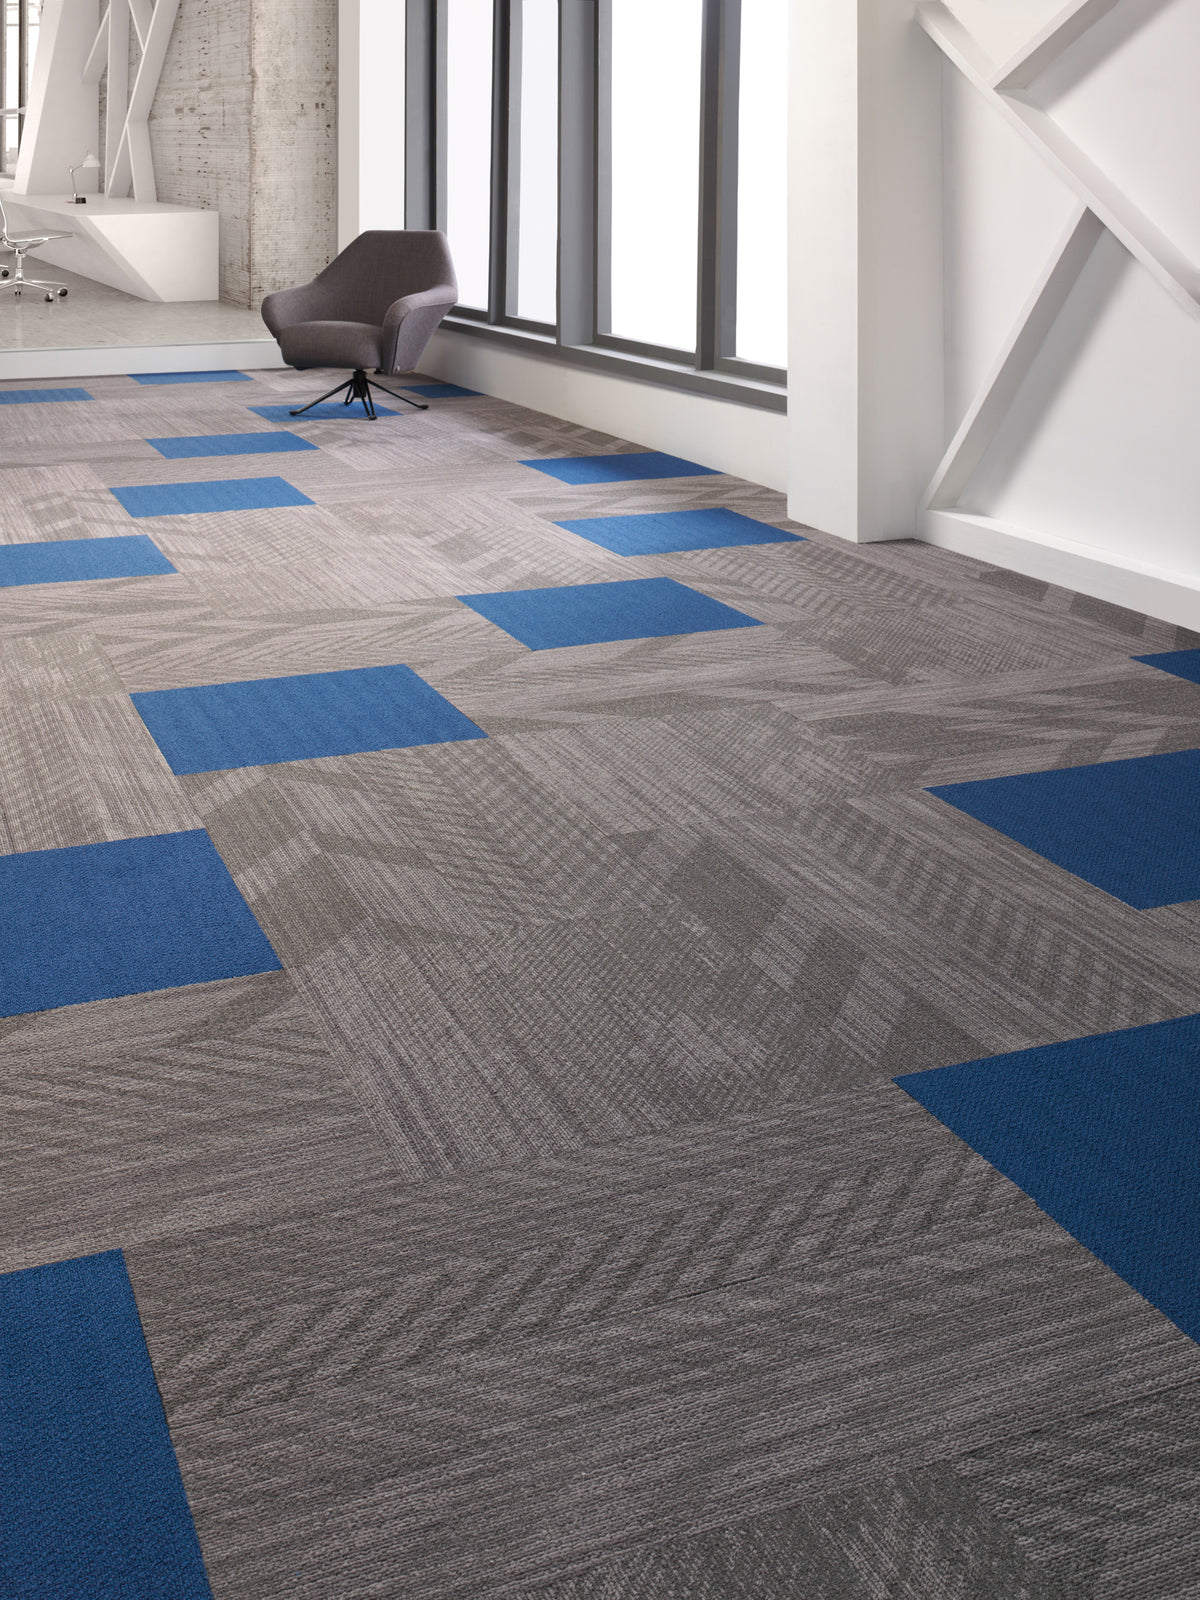 Mohawk Group - Colorbeat - Commercial Carpet Tile - Kaleidoscope